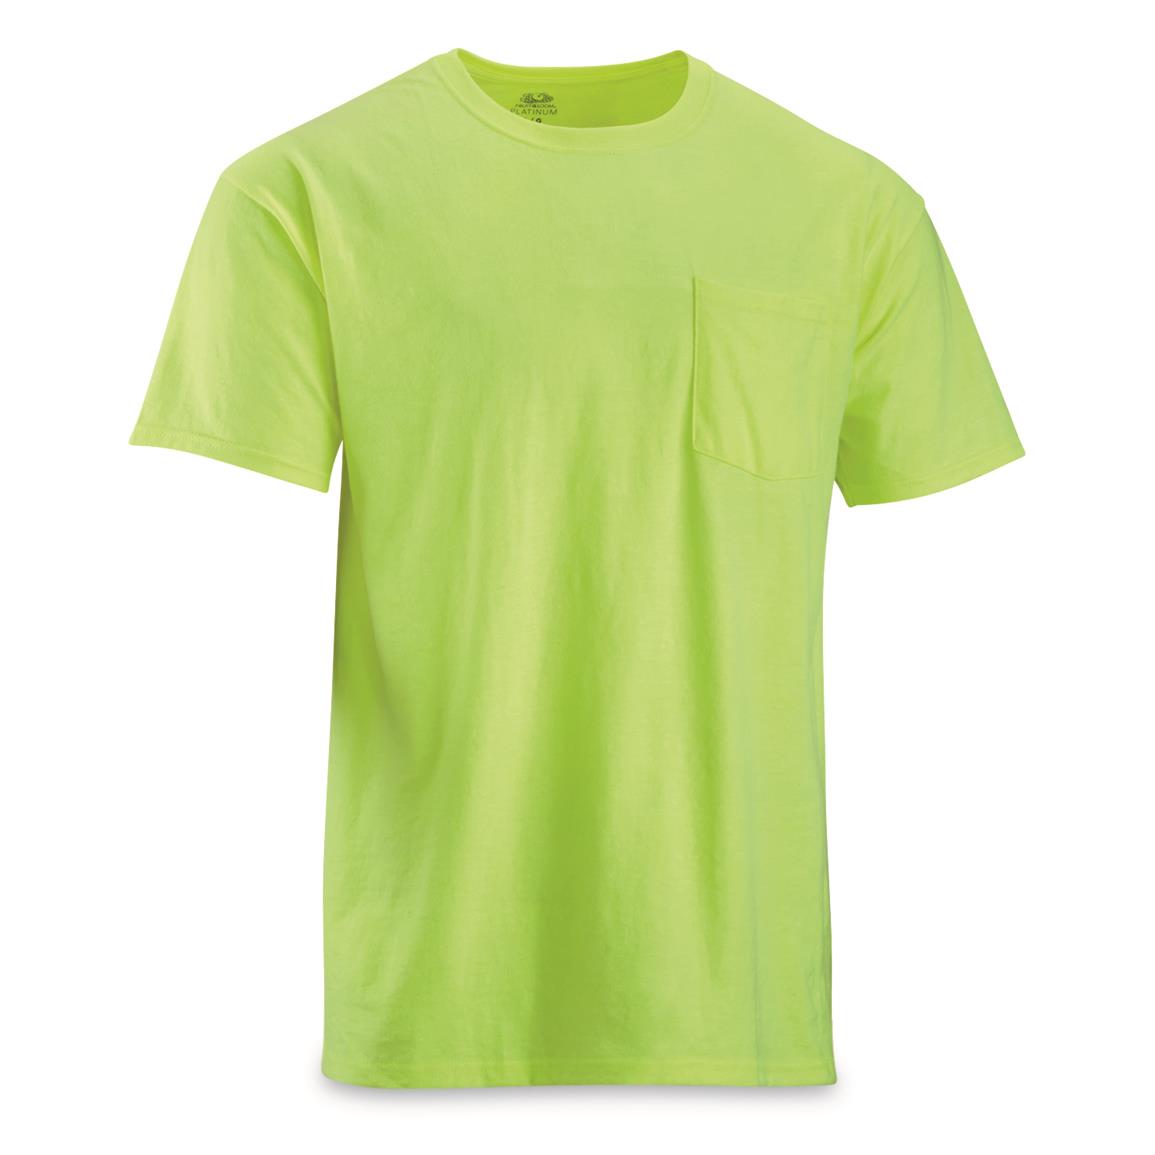 U.S. Municipal Surplus HiVis Safety T-Shirts, 2 Pack, New, Hi-Vis Yellow